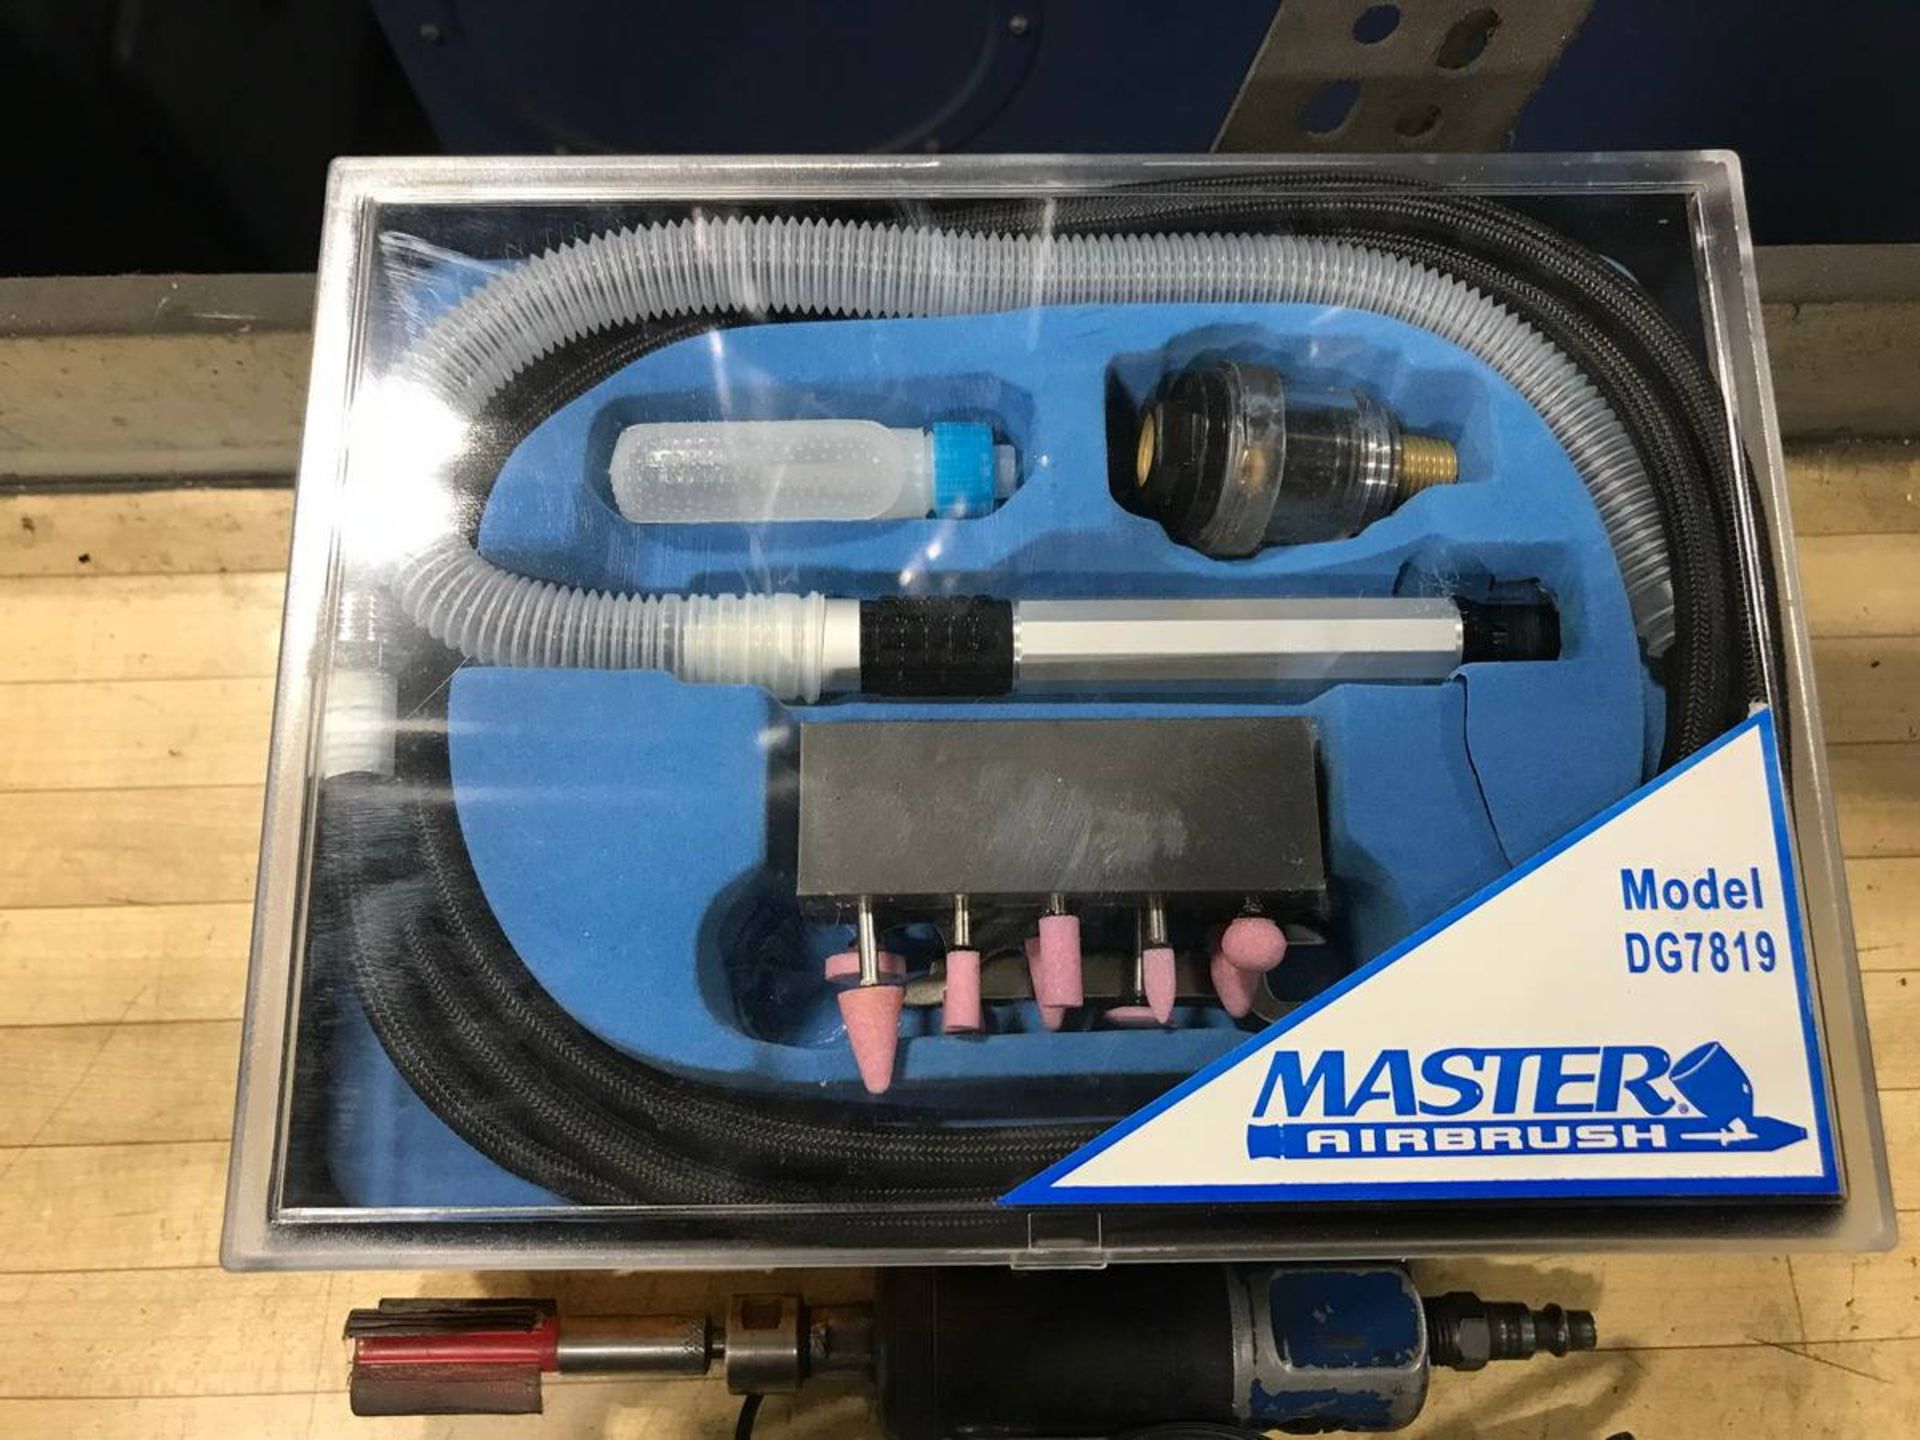 Master Air Brush DG7819 (3) Air Brush Kits - Image 2 of 2